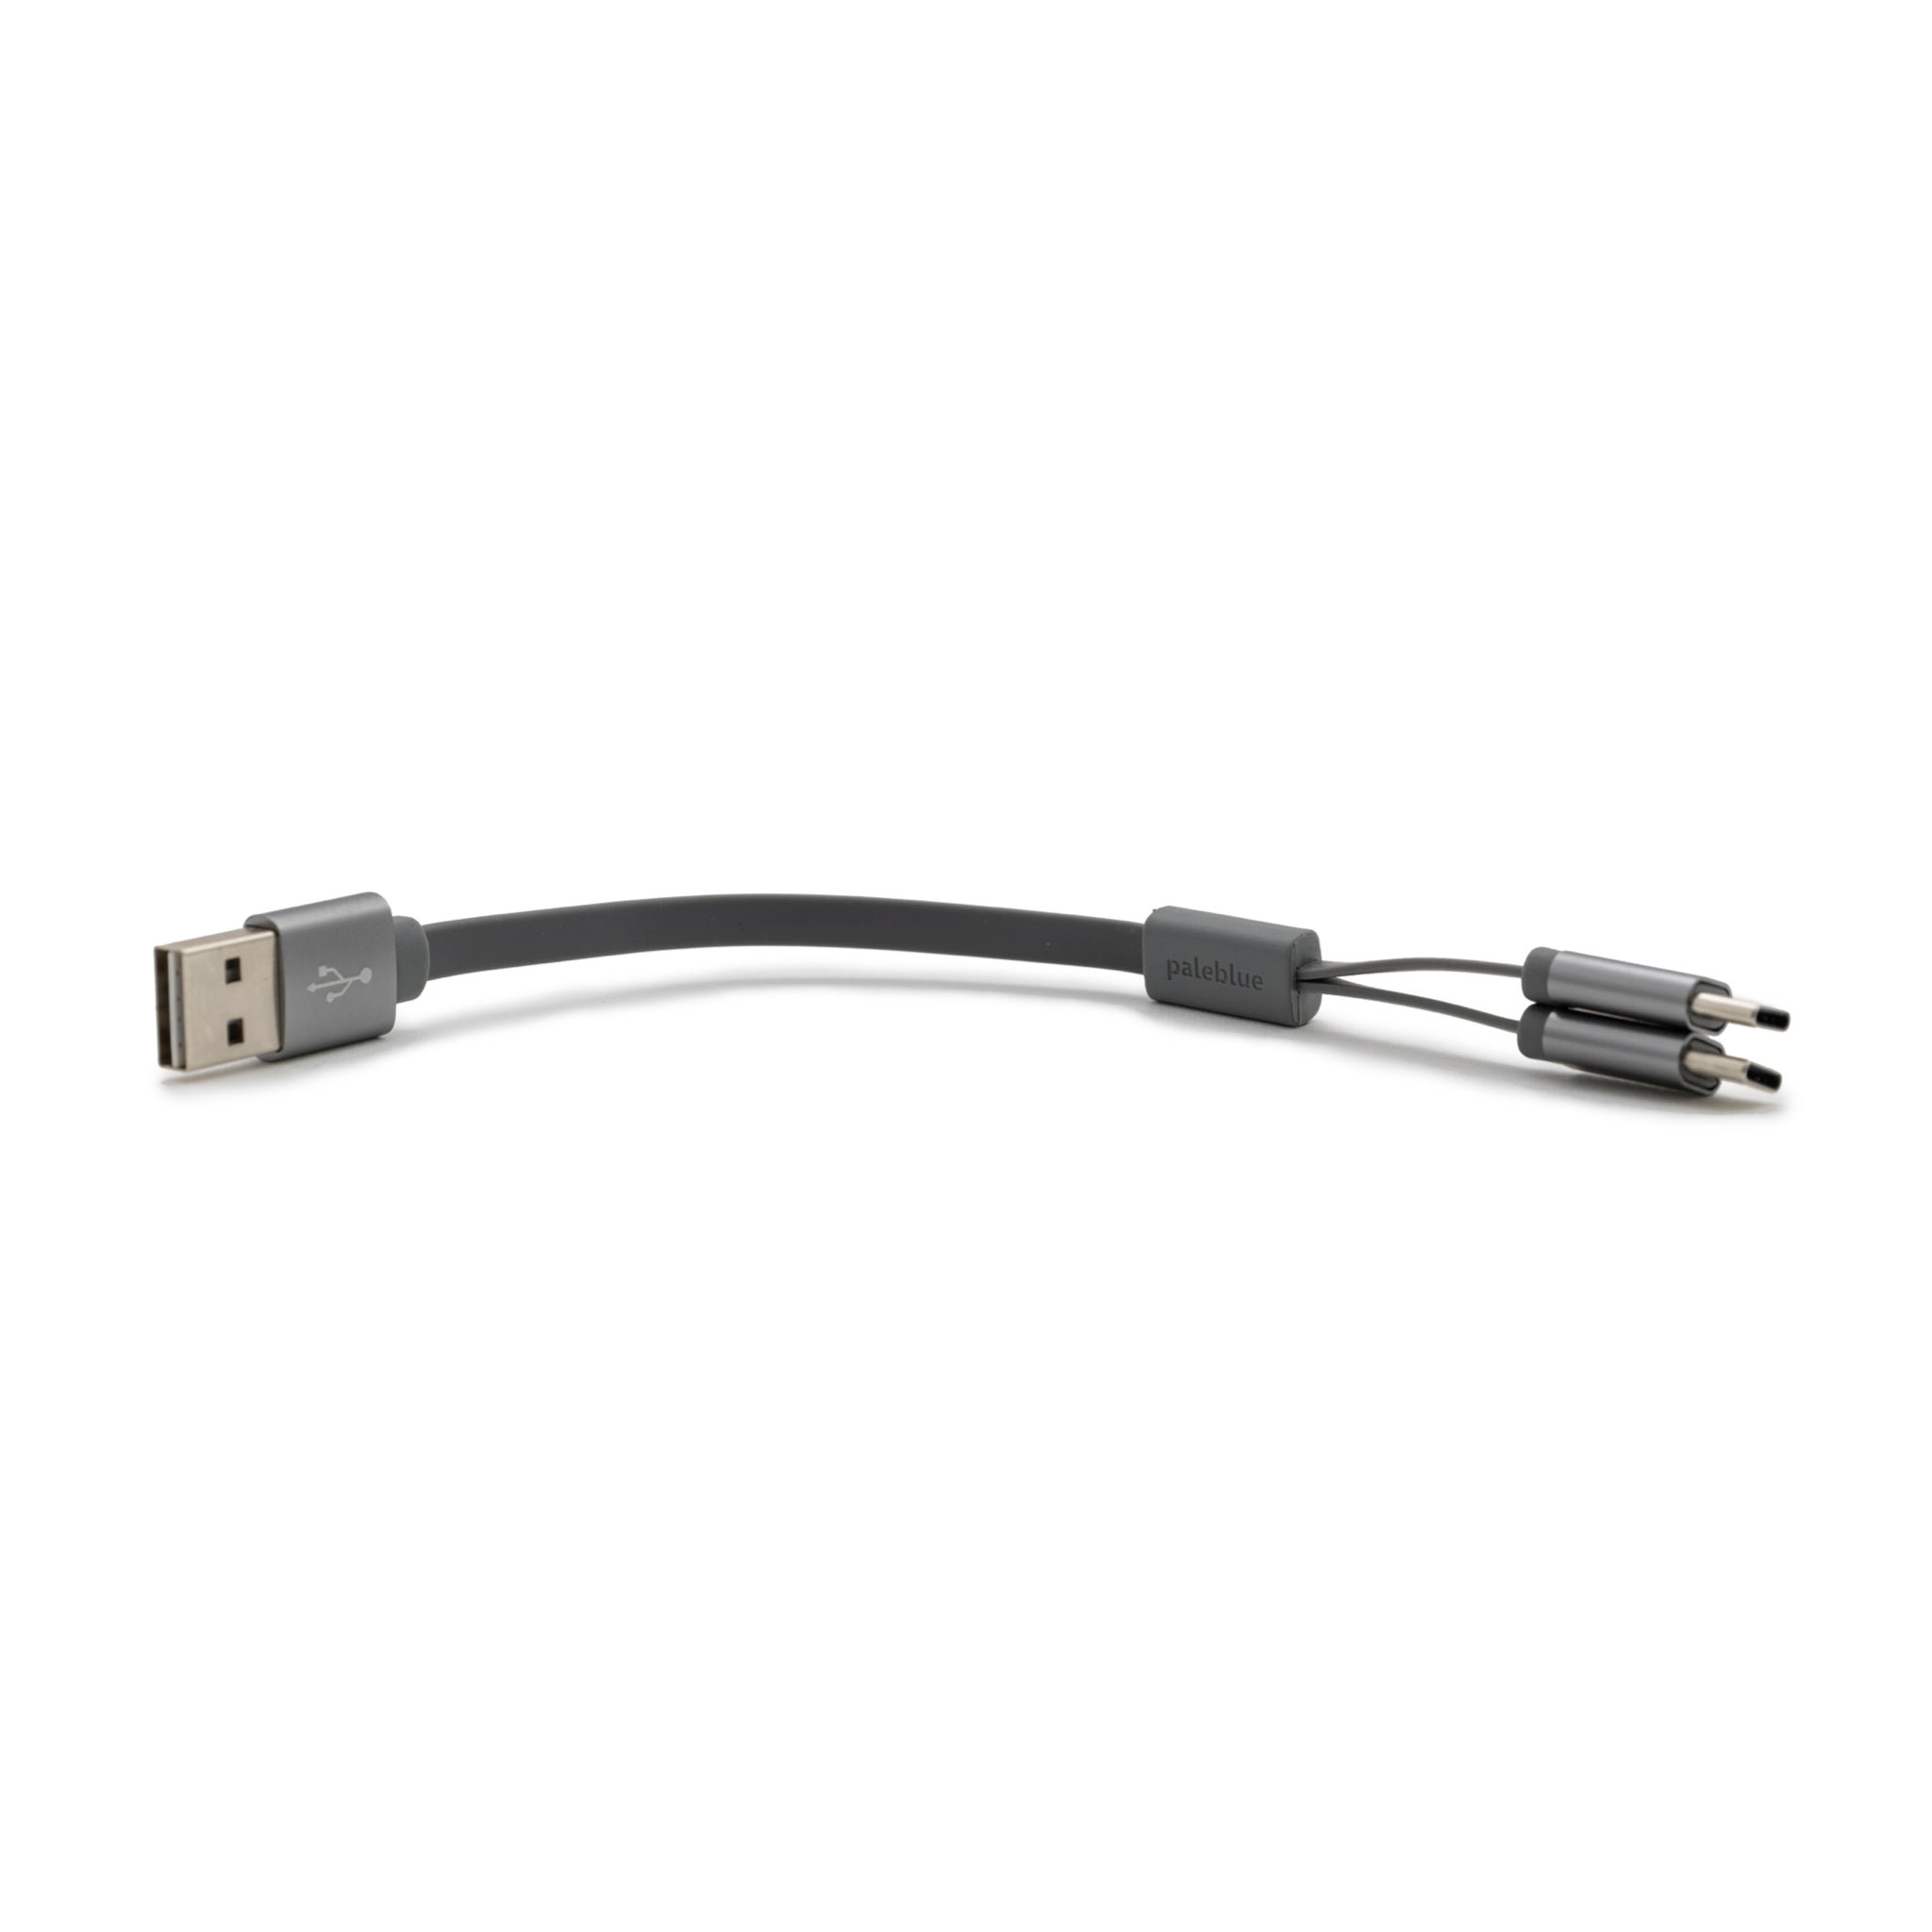 USB-C Cable 2X (20cm) – Paleblue